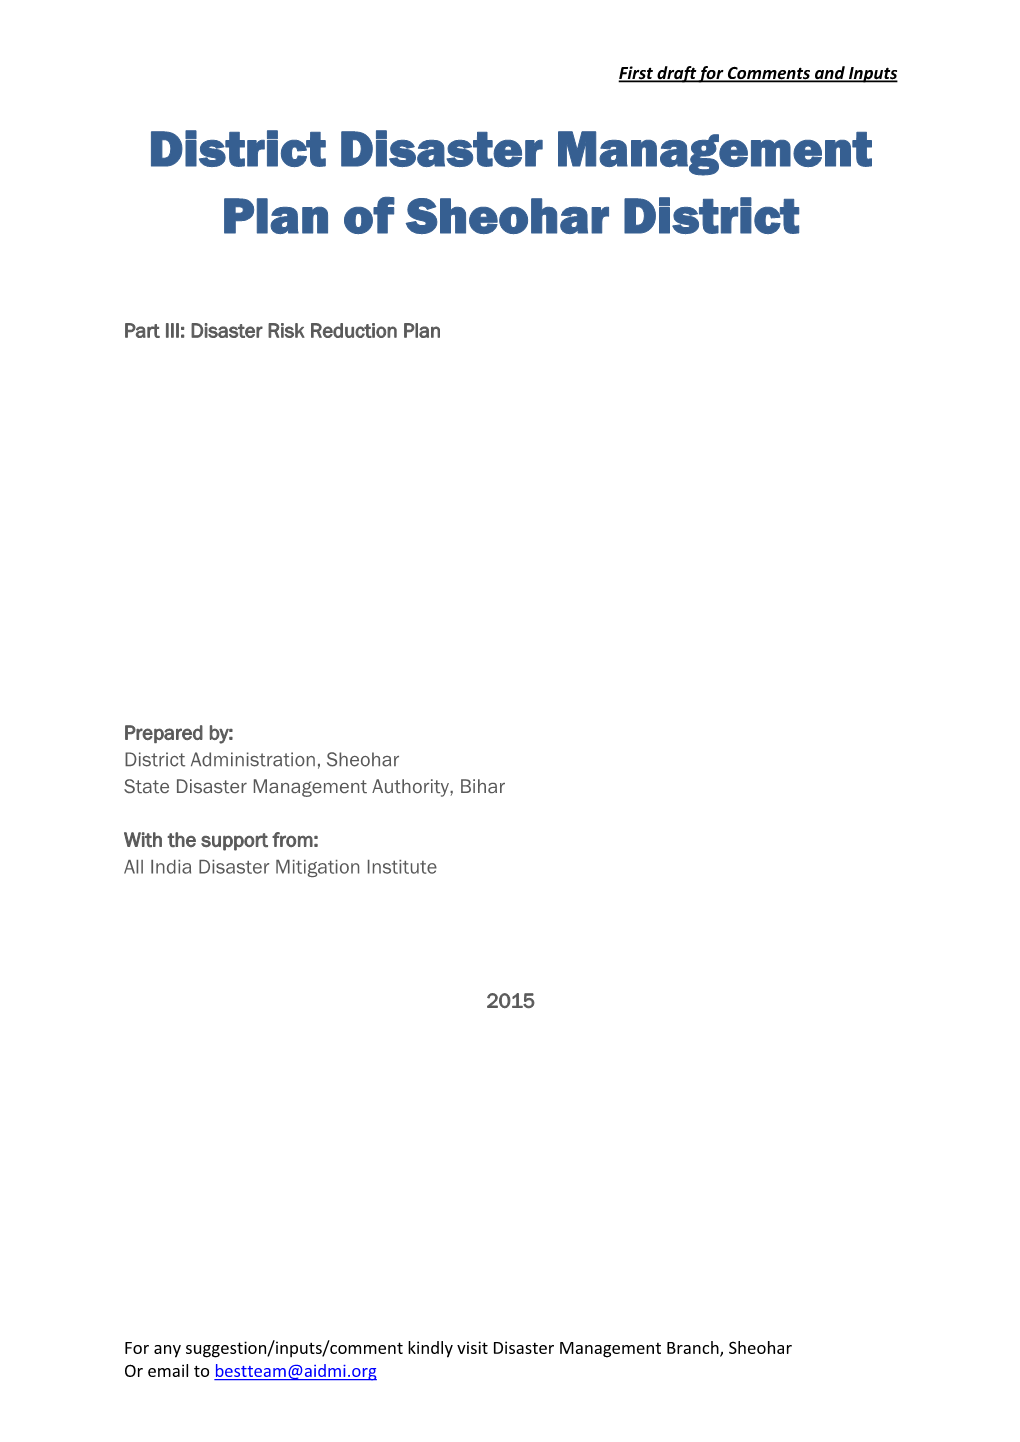 District Disaster Management Plan of Sheohar District